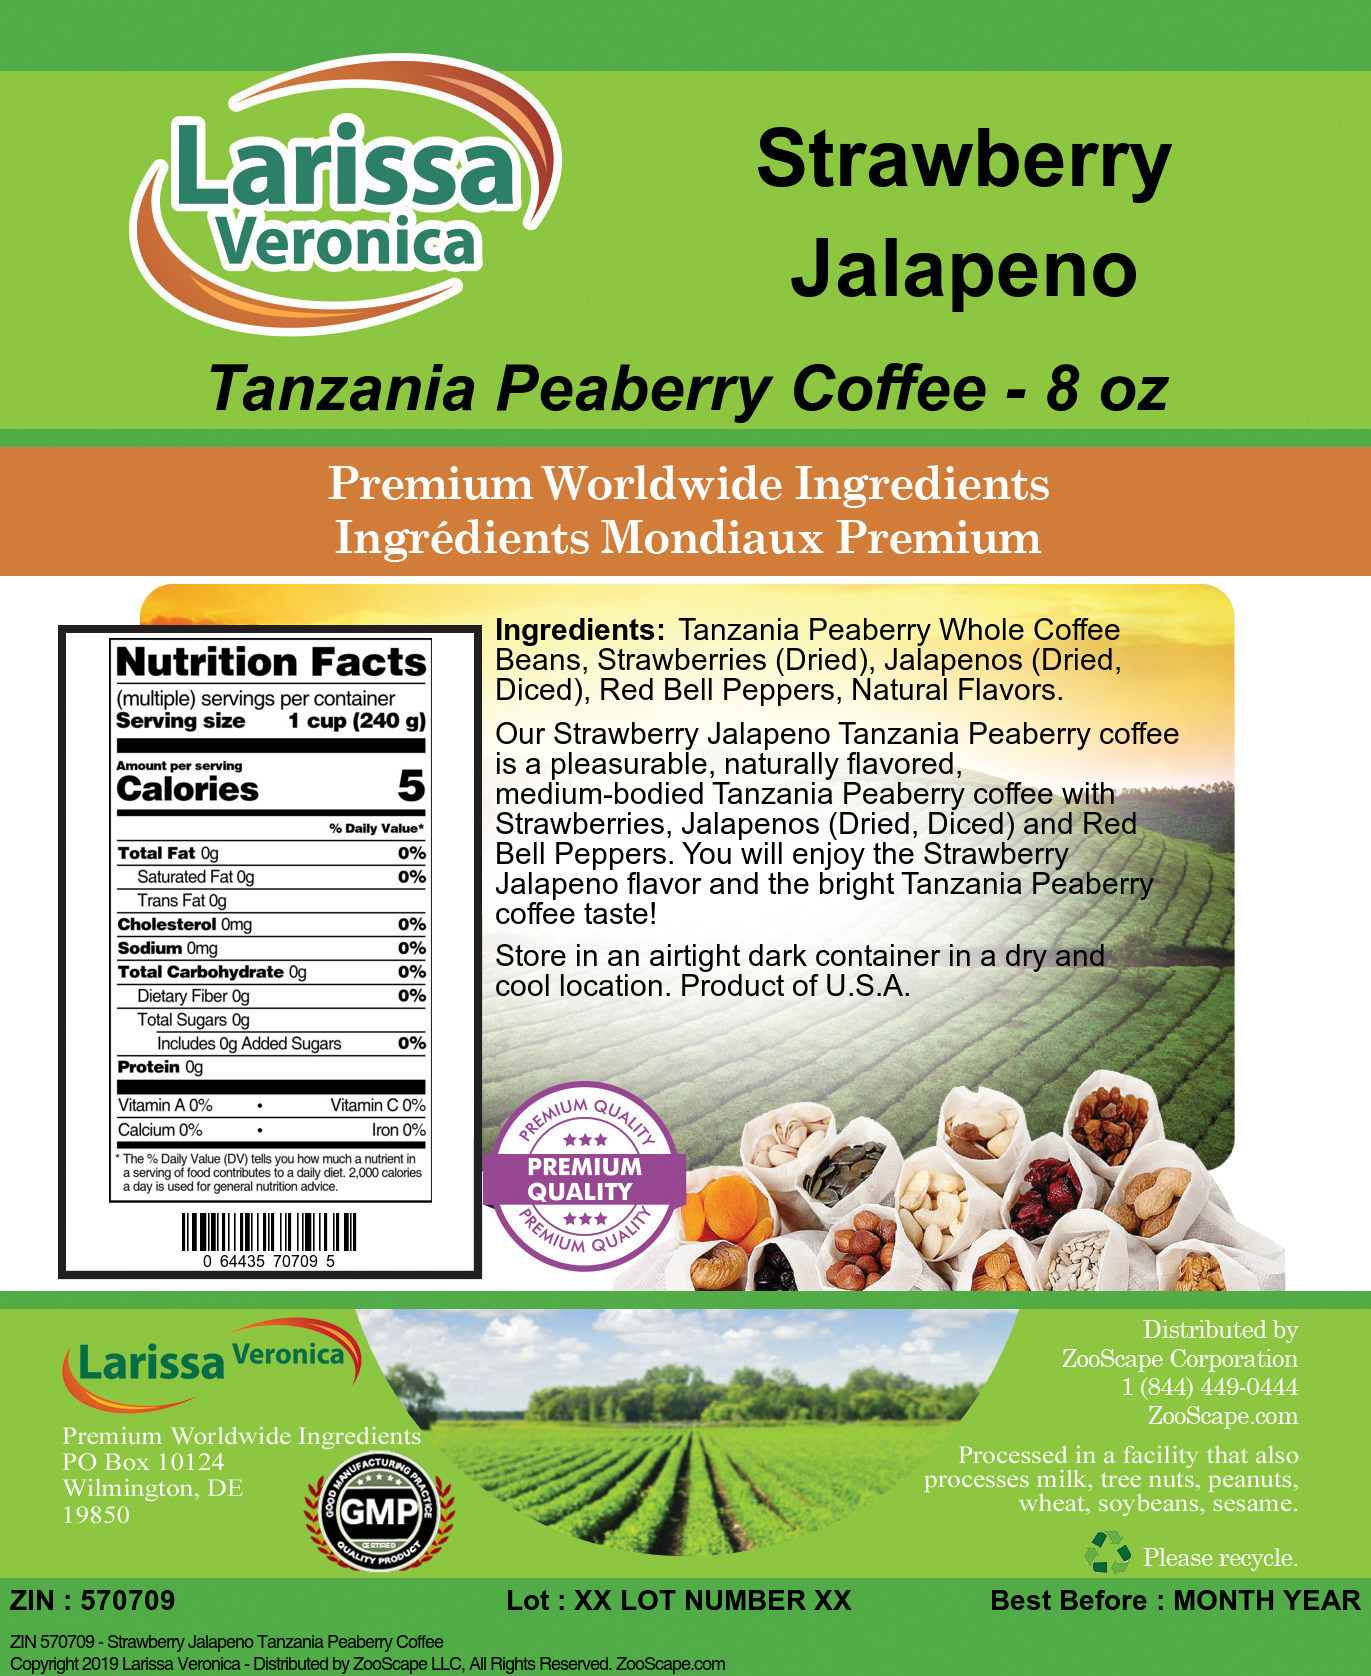 Strawberry Jalapeno Tanzania Peaberry Coffee - Label